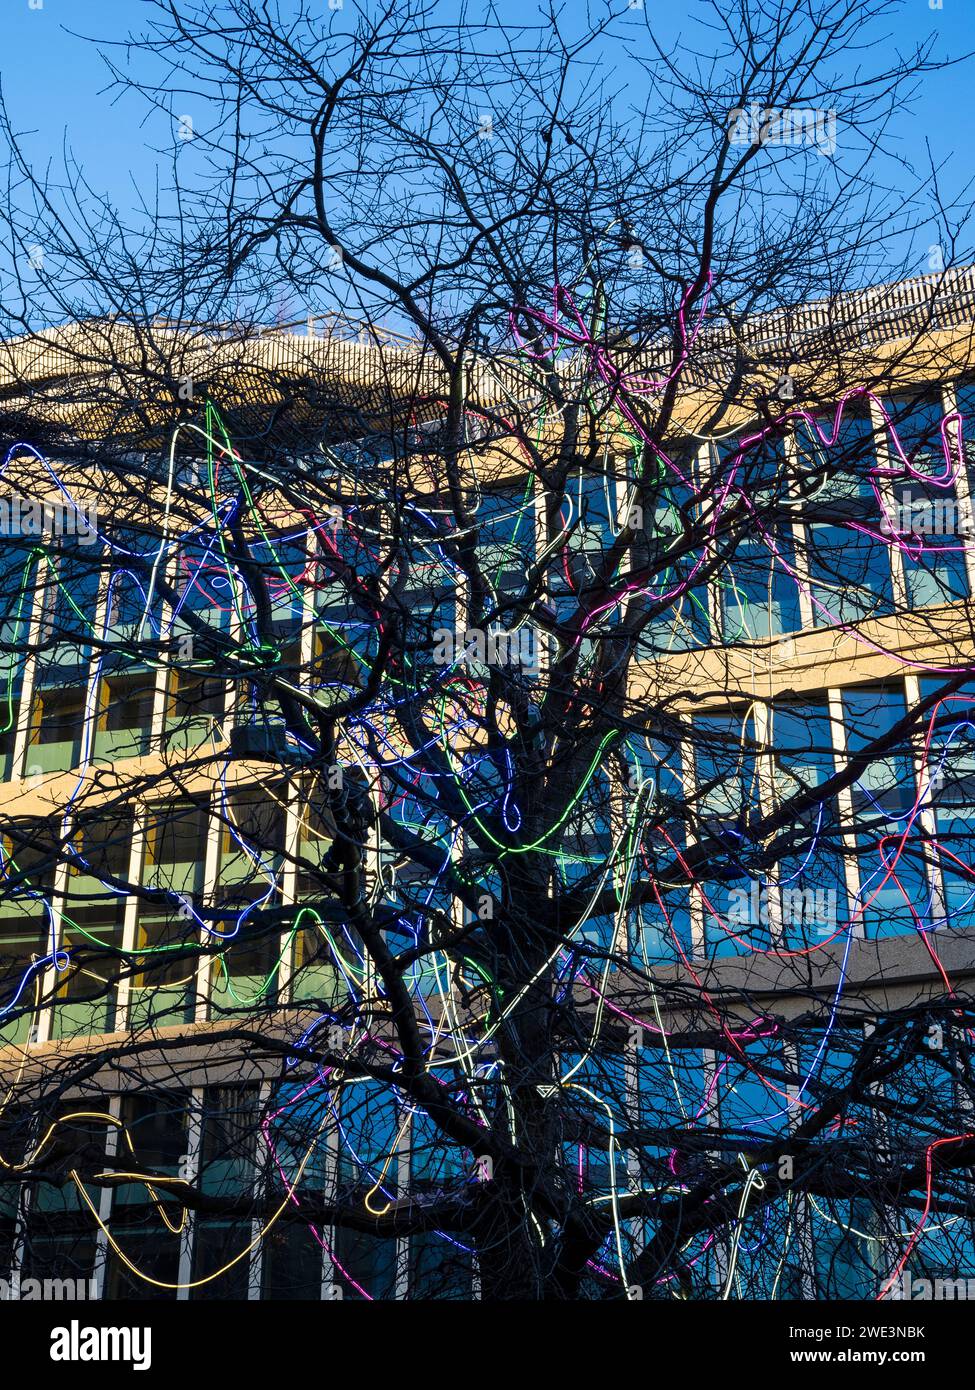 Tree with Neon Lighting, St pancreas Square, parte della Kings Cross Redevelopment, Kings Cross, Londra, Inghilterra, Regno Unito, GB. Foto Stock